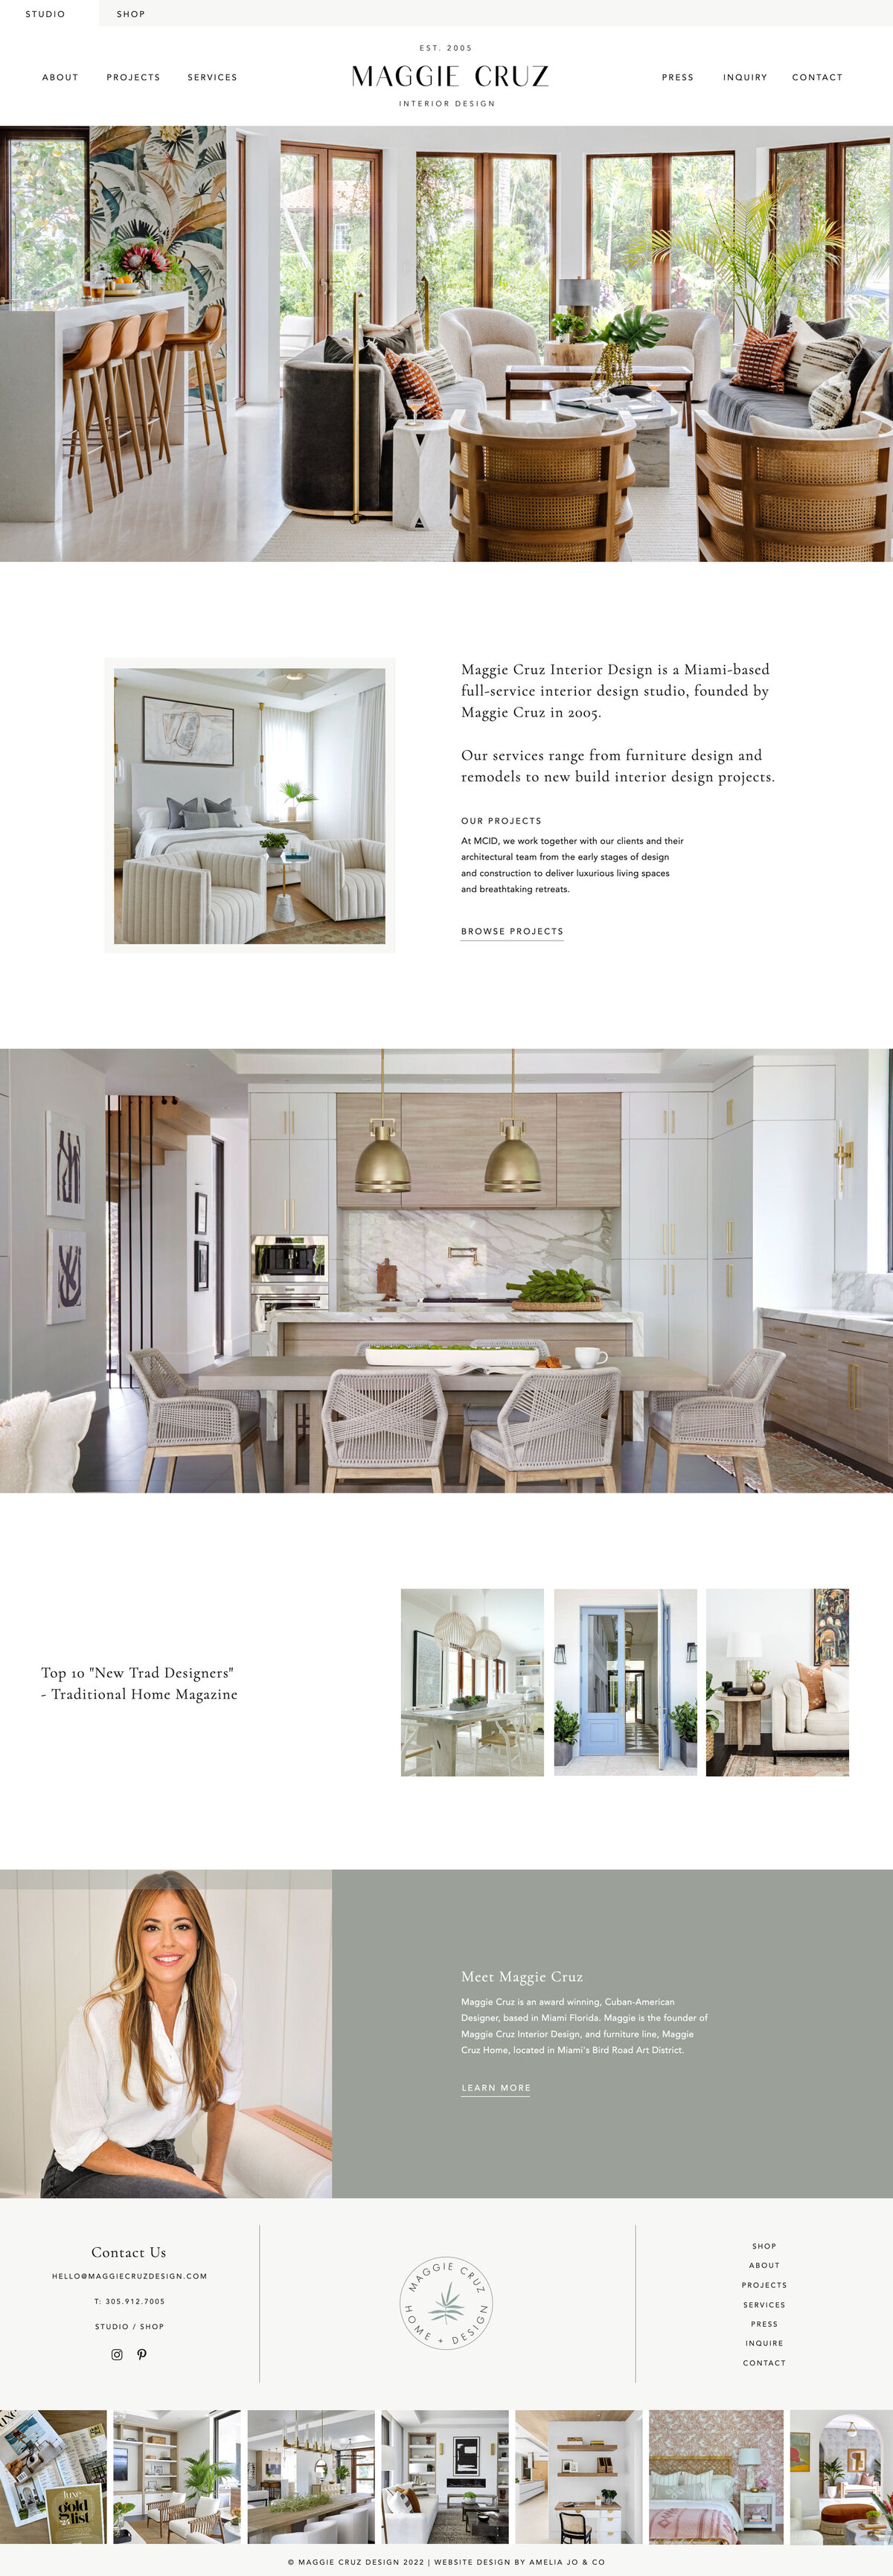 Homepage of Maggie Cruz Interior Design featuring midcentury style living room